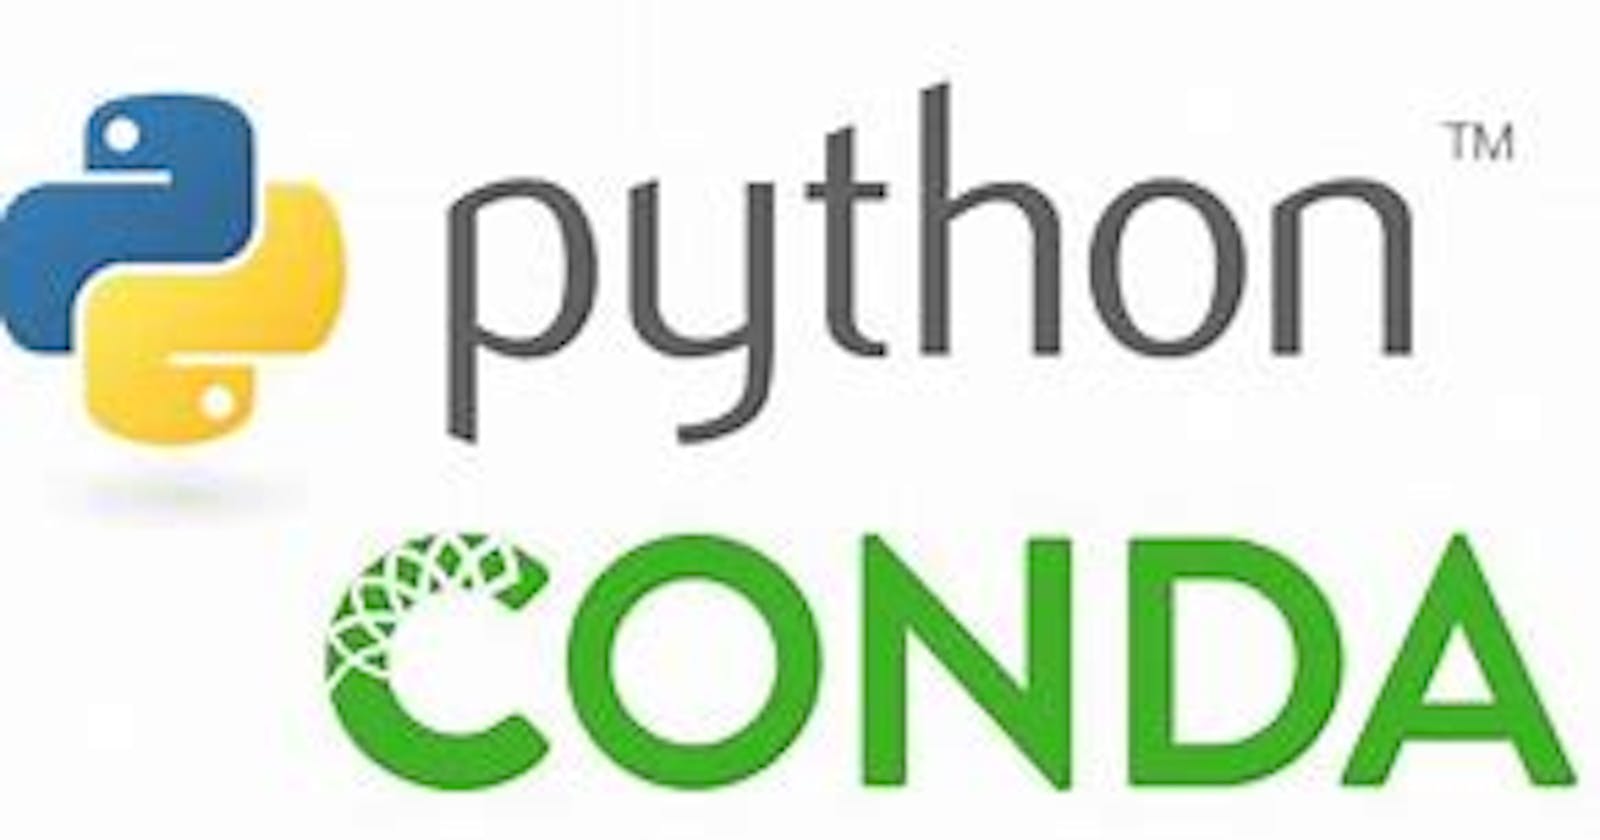 2- Install Python through Miniconda